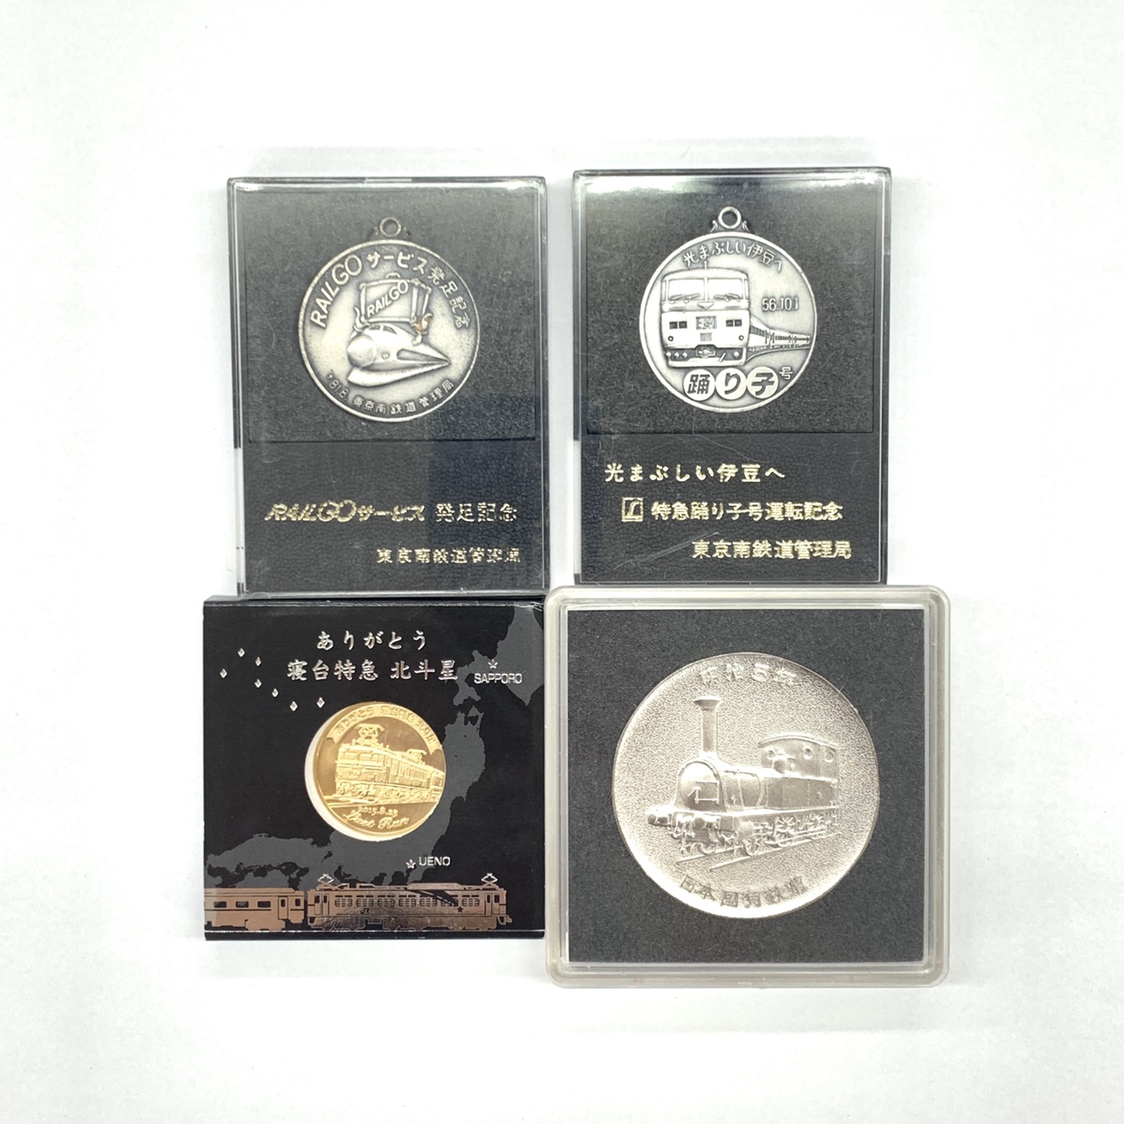 葛西臨海水族園 Tokyo Sea Life Park 記念メダル2枚 茶平工業 - 雑貨